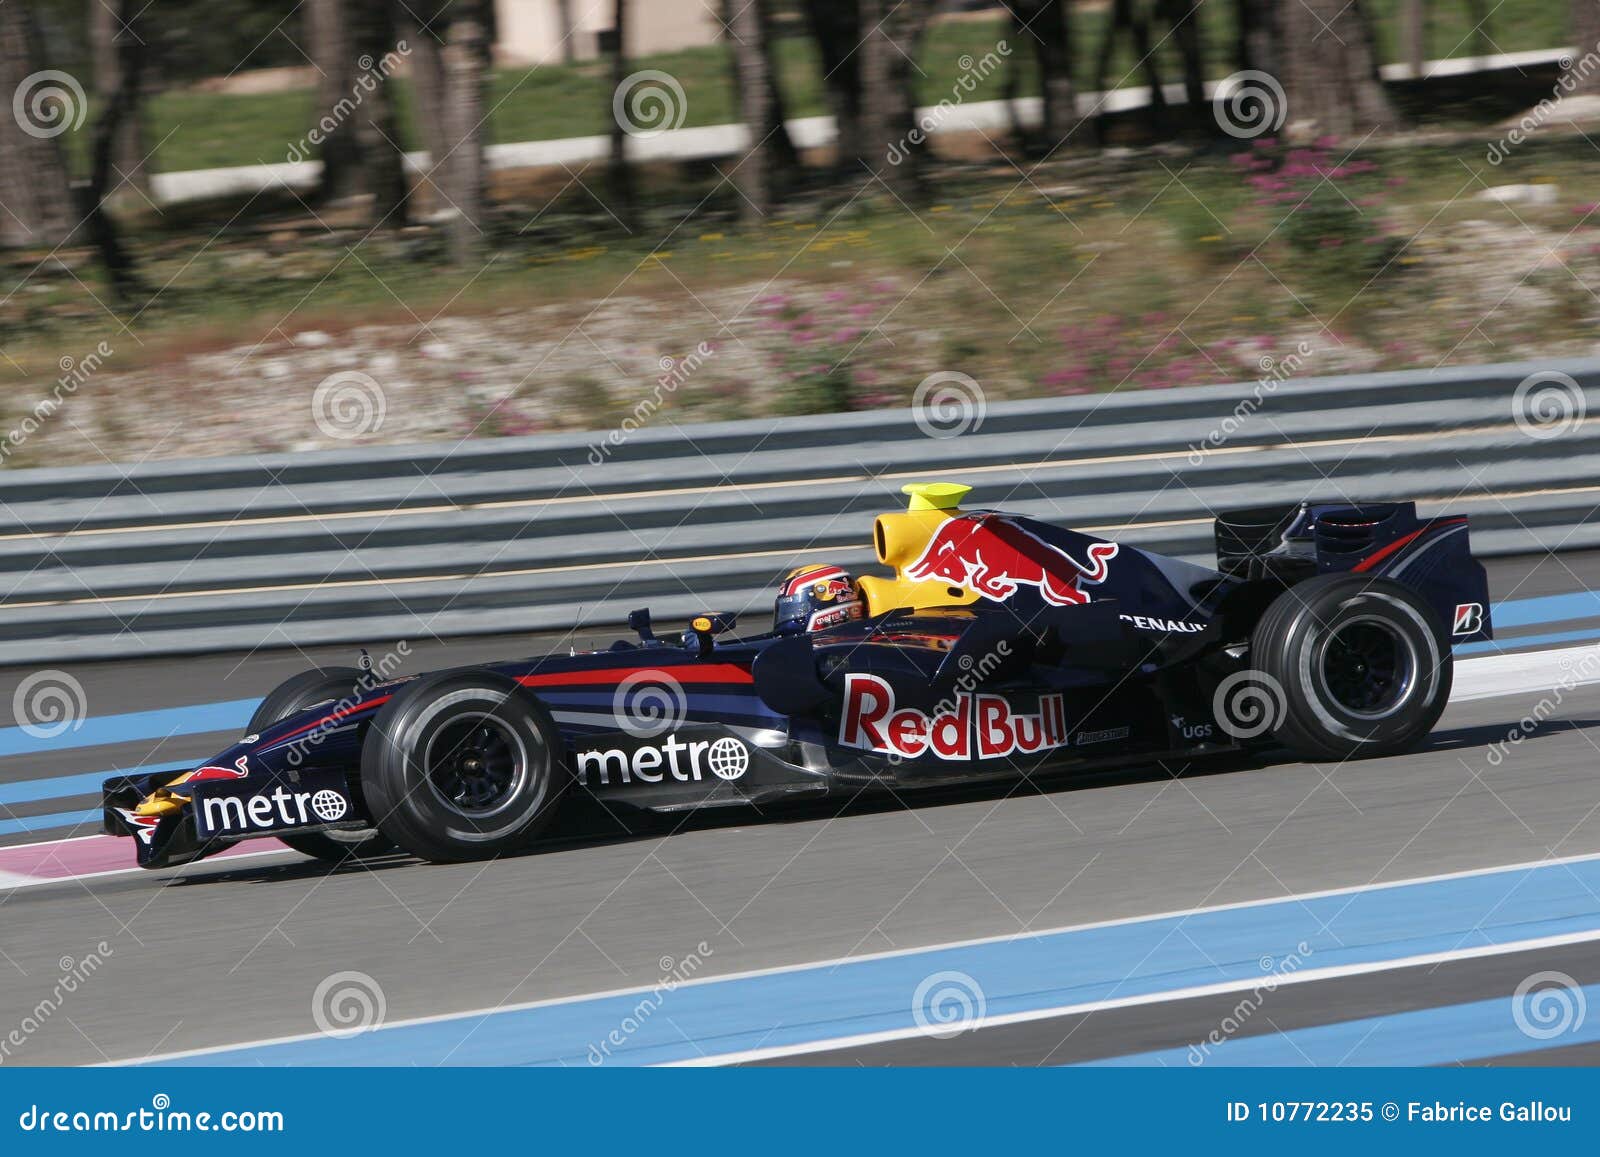 F1 - Webber Bull Editorial Image - Image of 2007, 10772235